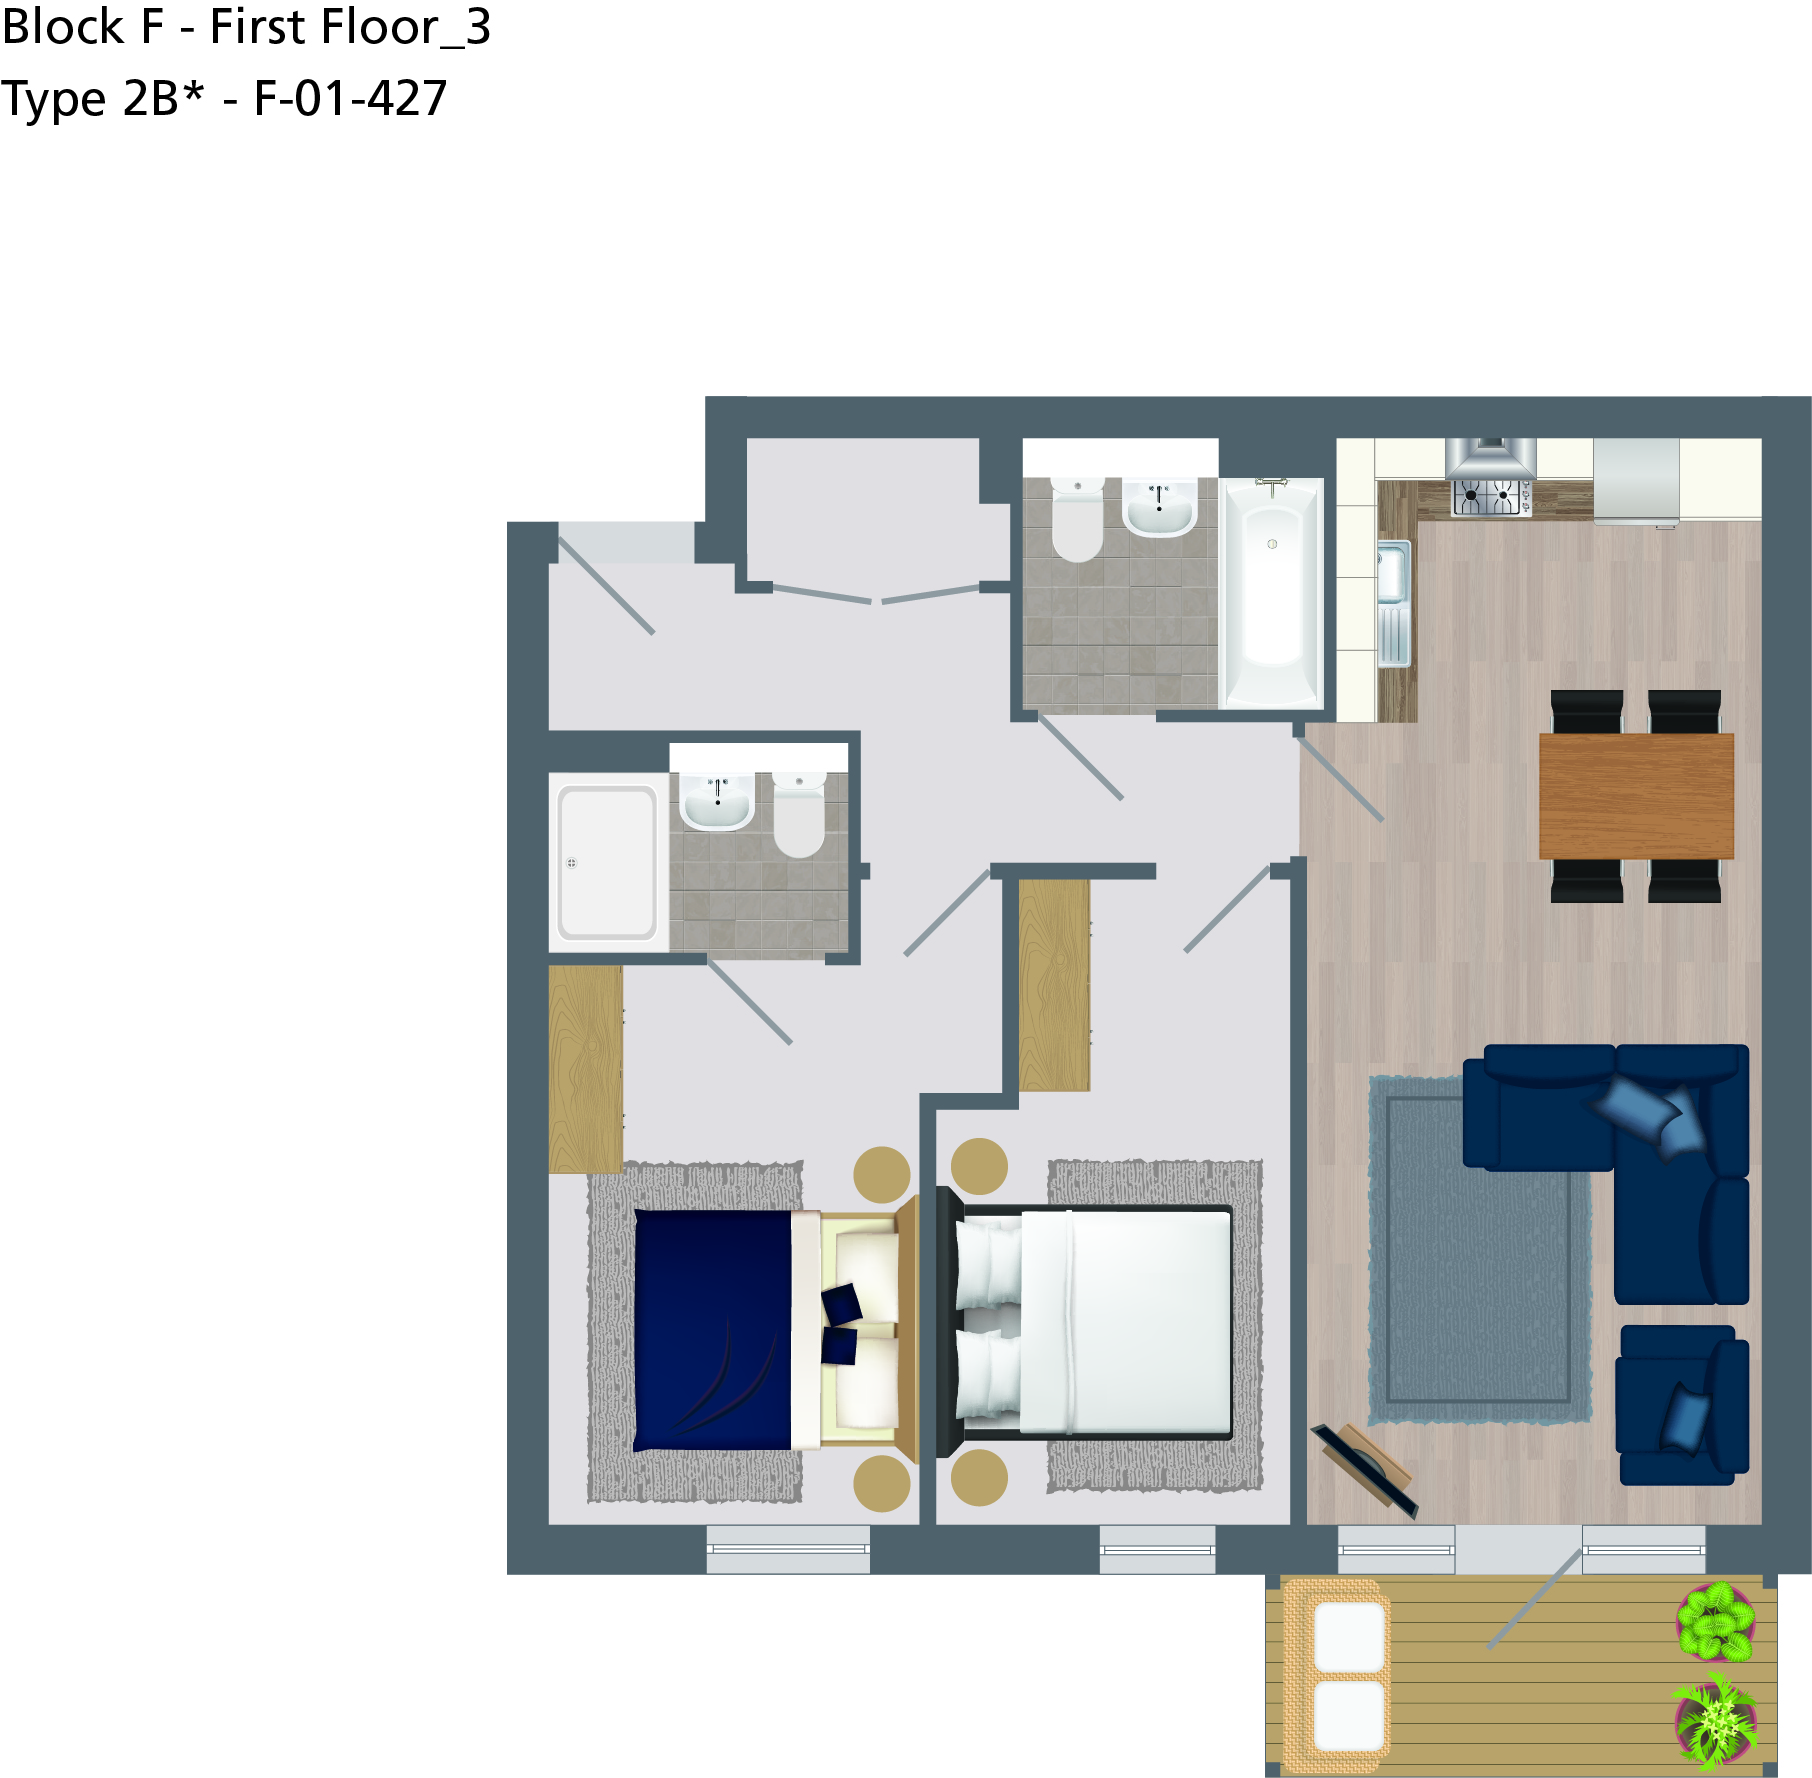 Apartment Layout Floorplan